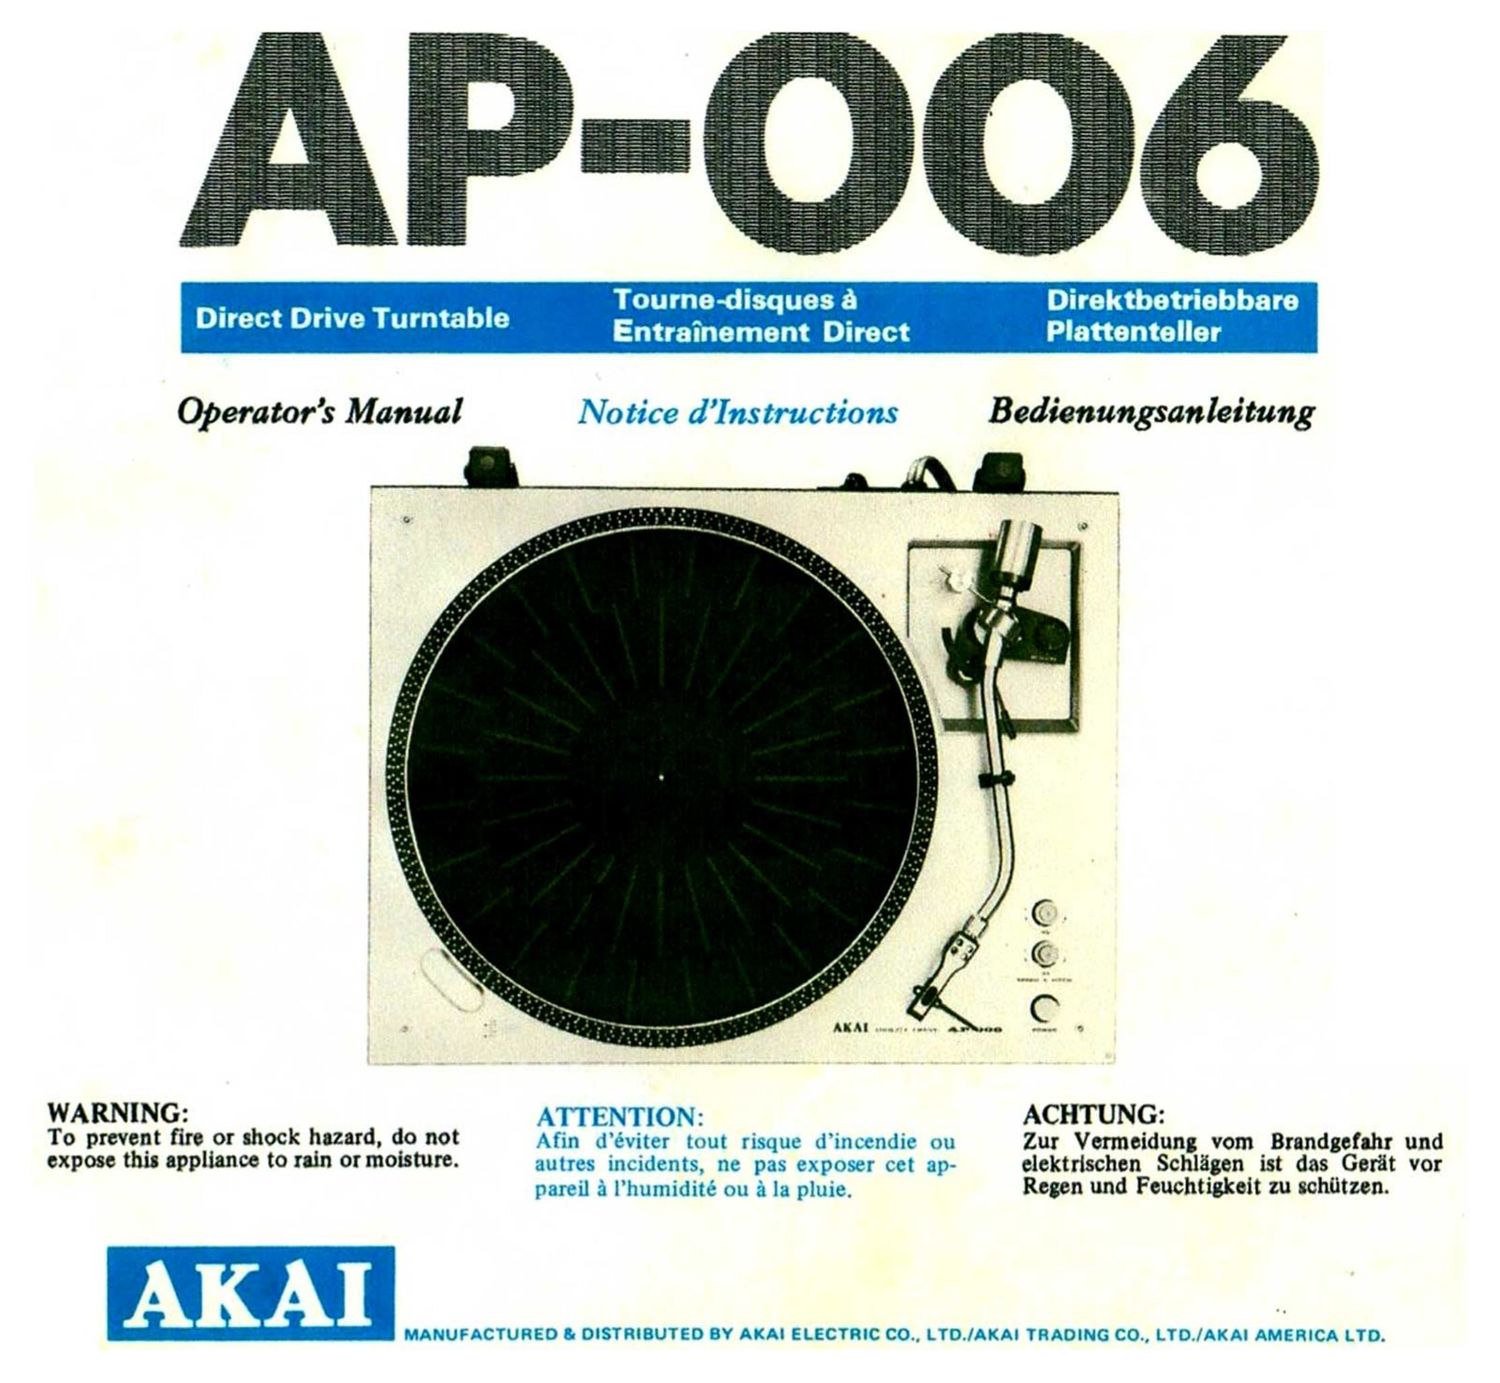 AKAI-ap-m640 Service Istruzioni Manual-b2299 